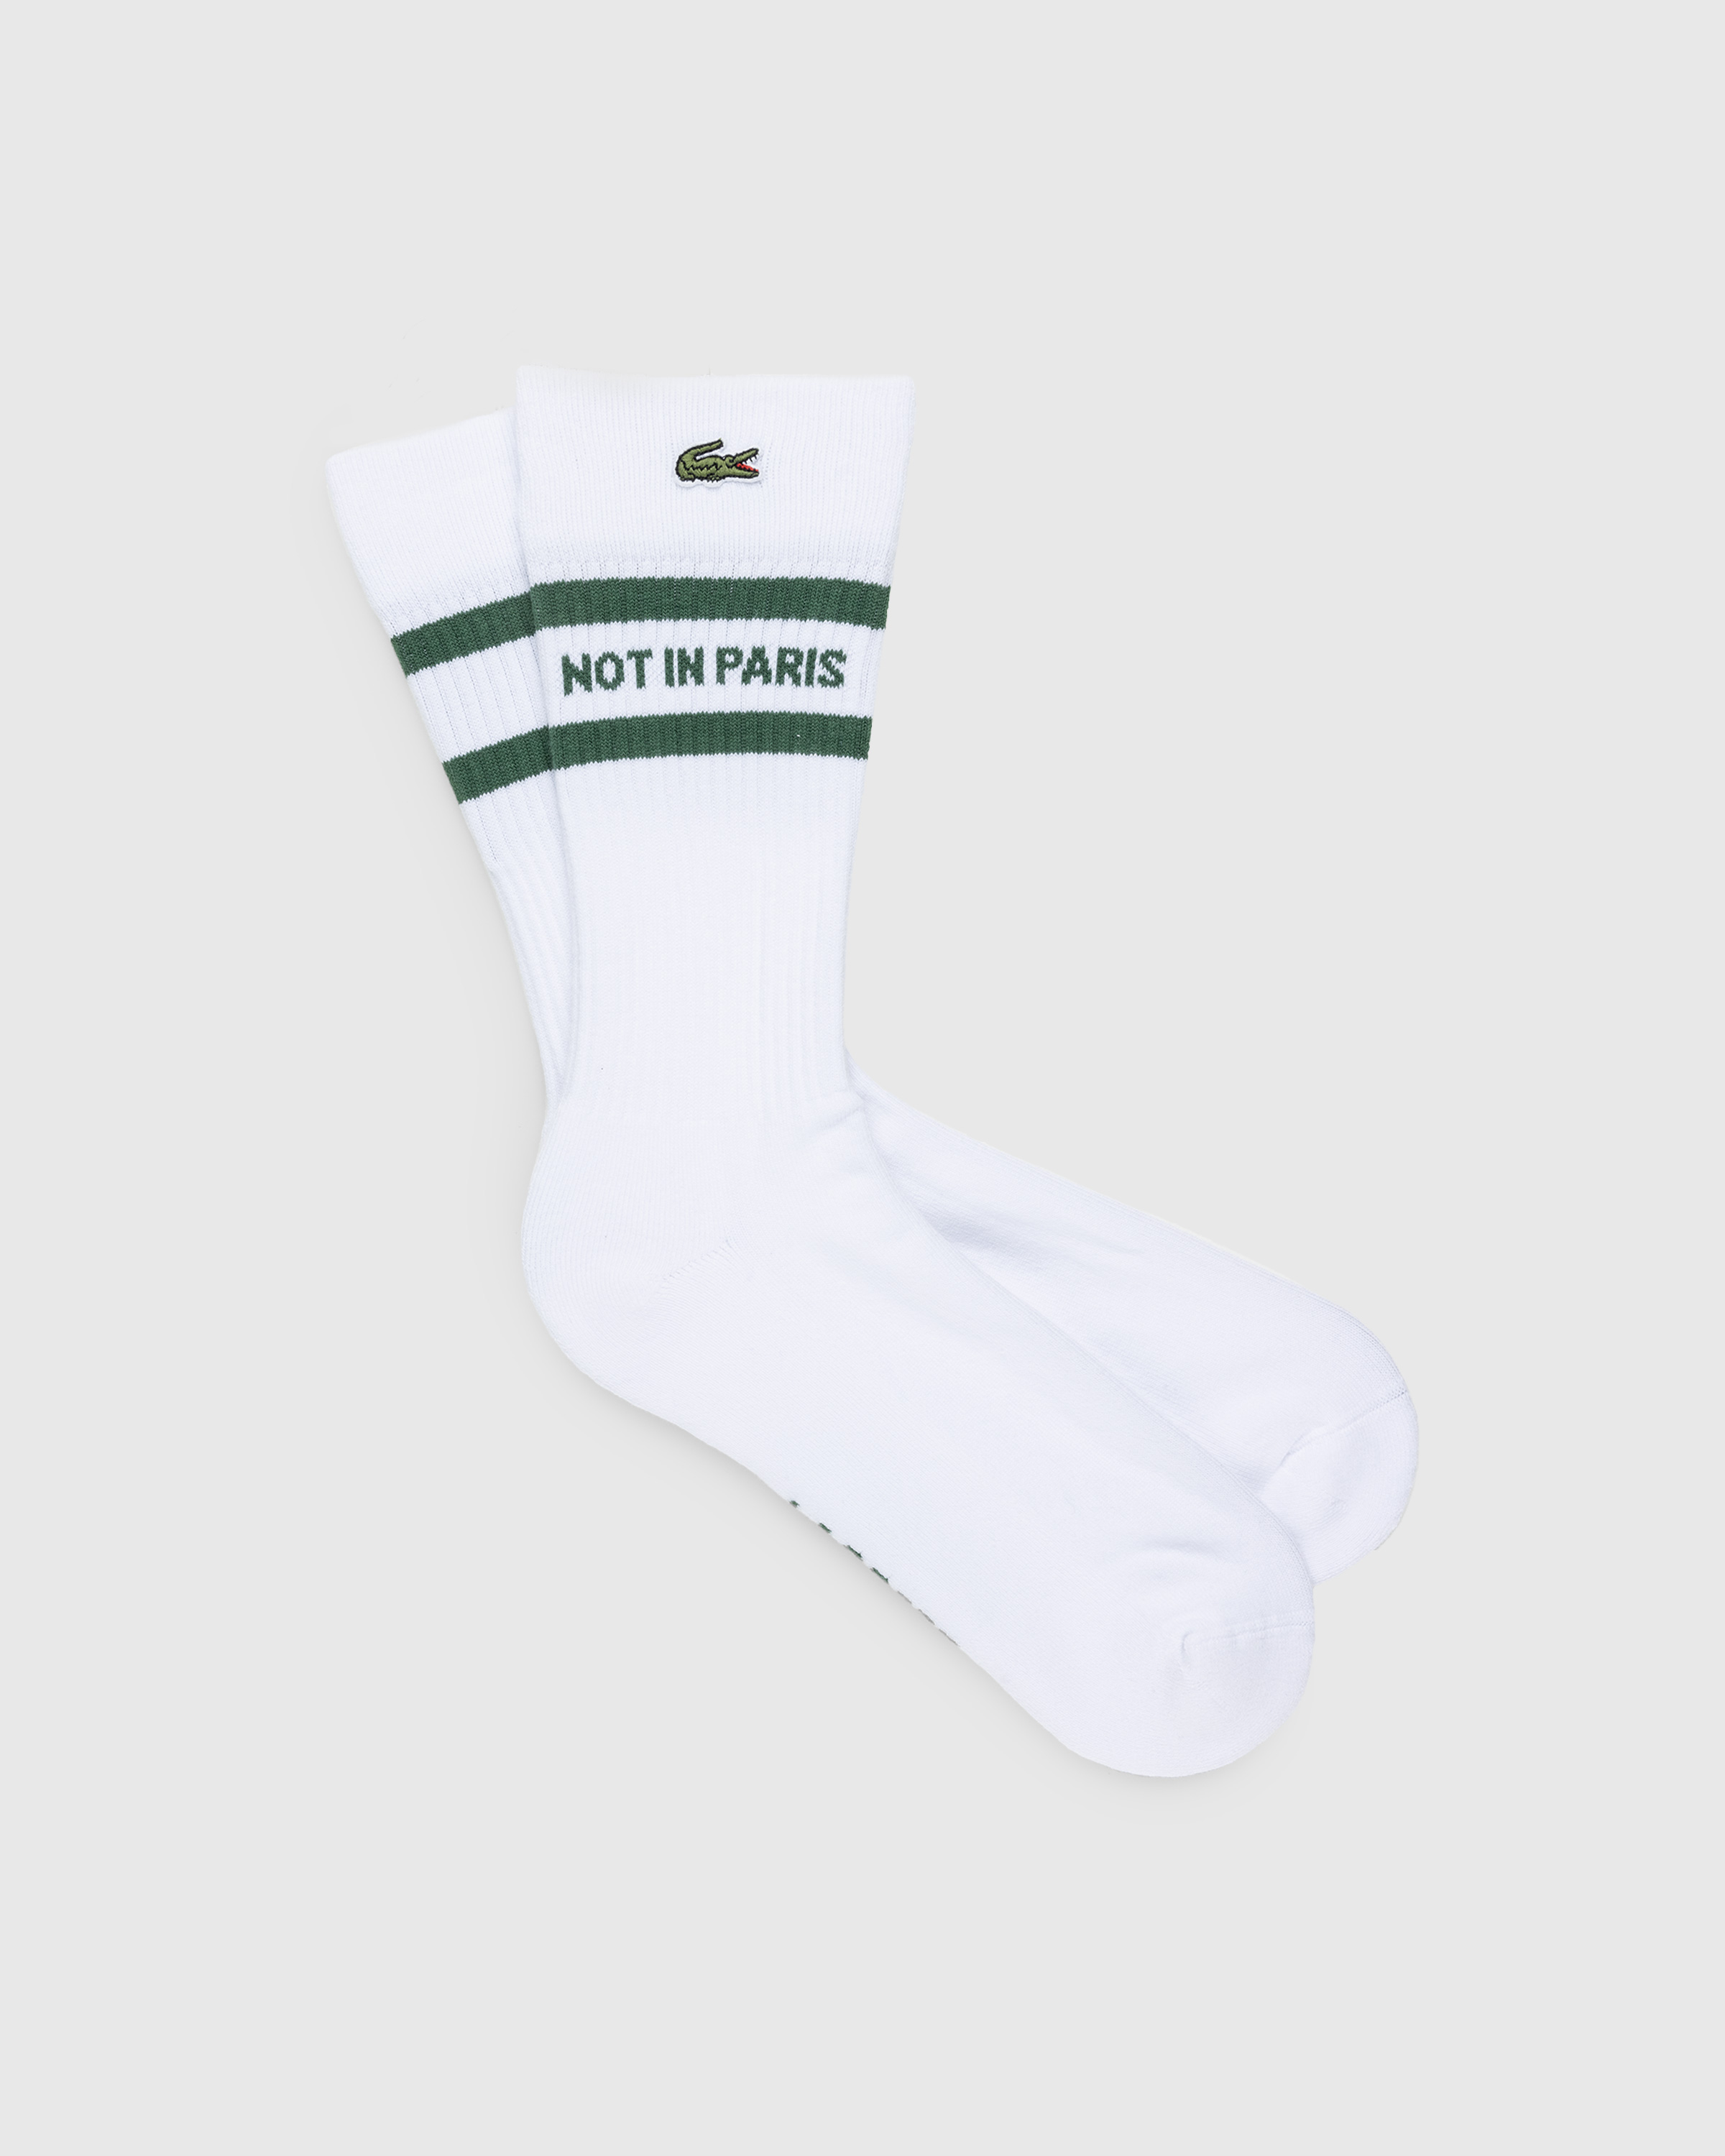 Lacoste x Highsnobiety – Not In Paris Socks White/Green - Crew - White - Image 1